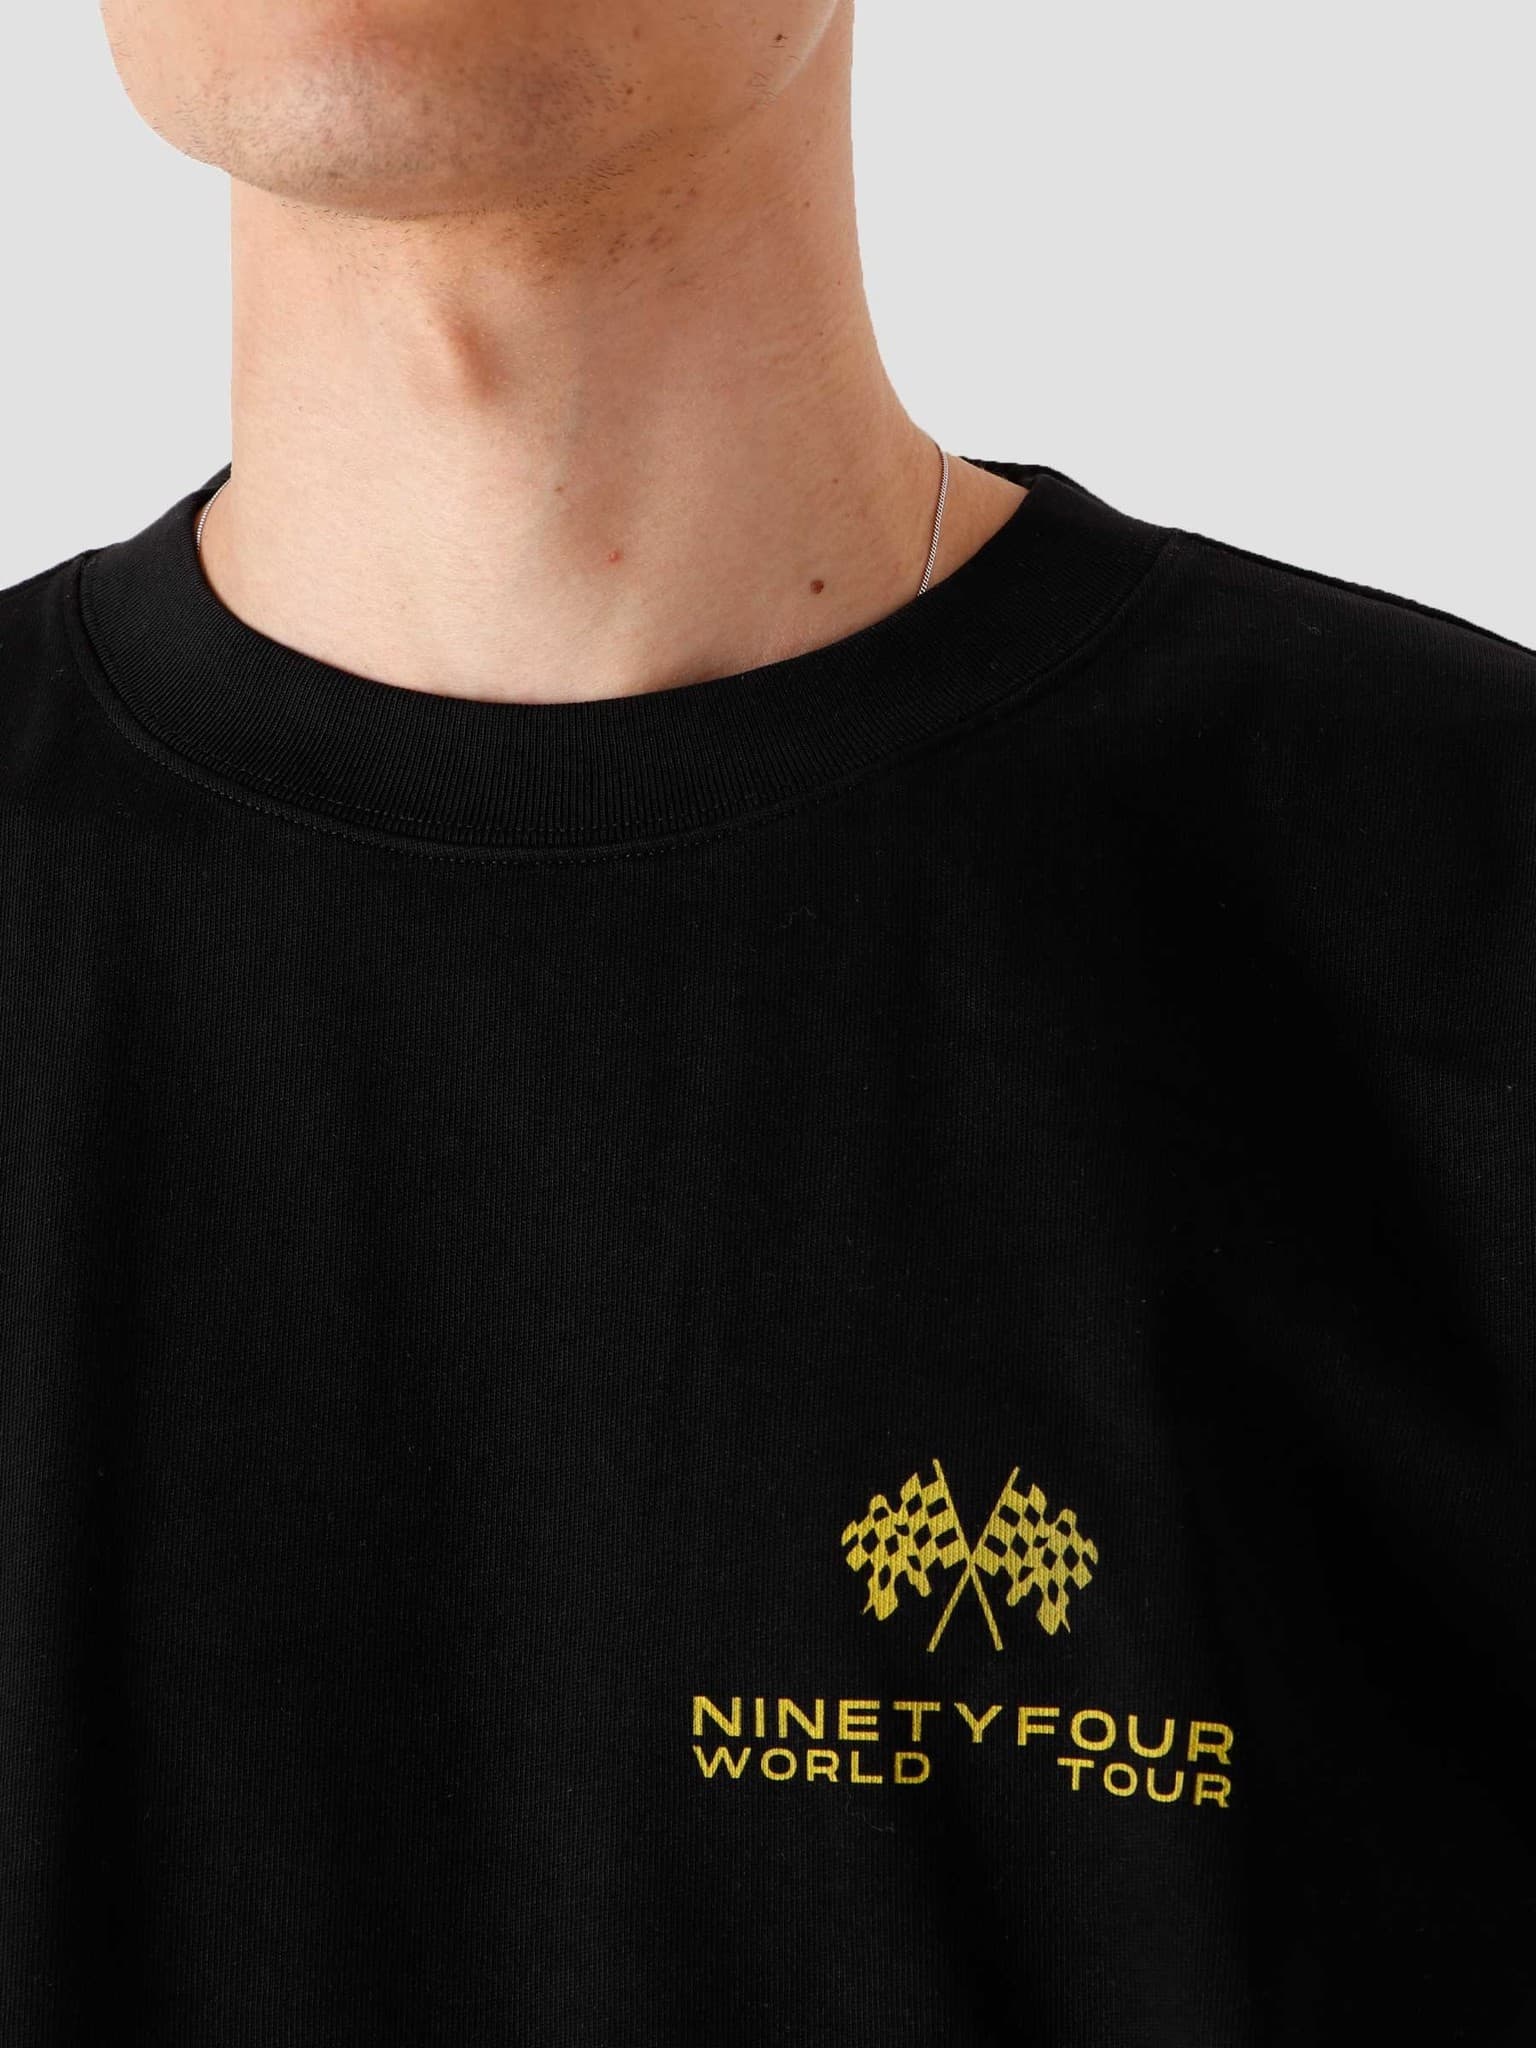 NTF World Tour T-Shirt Black